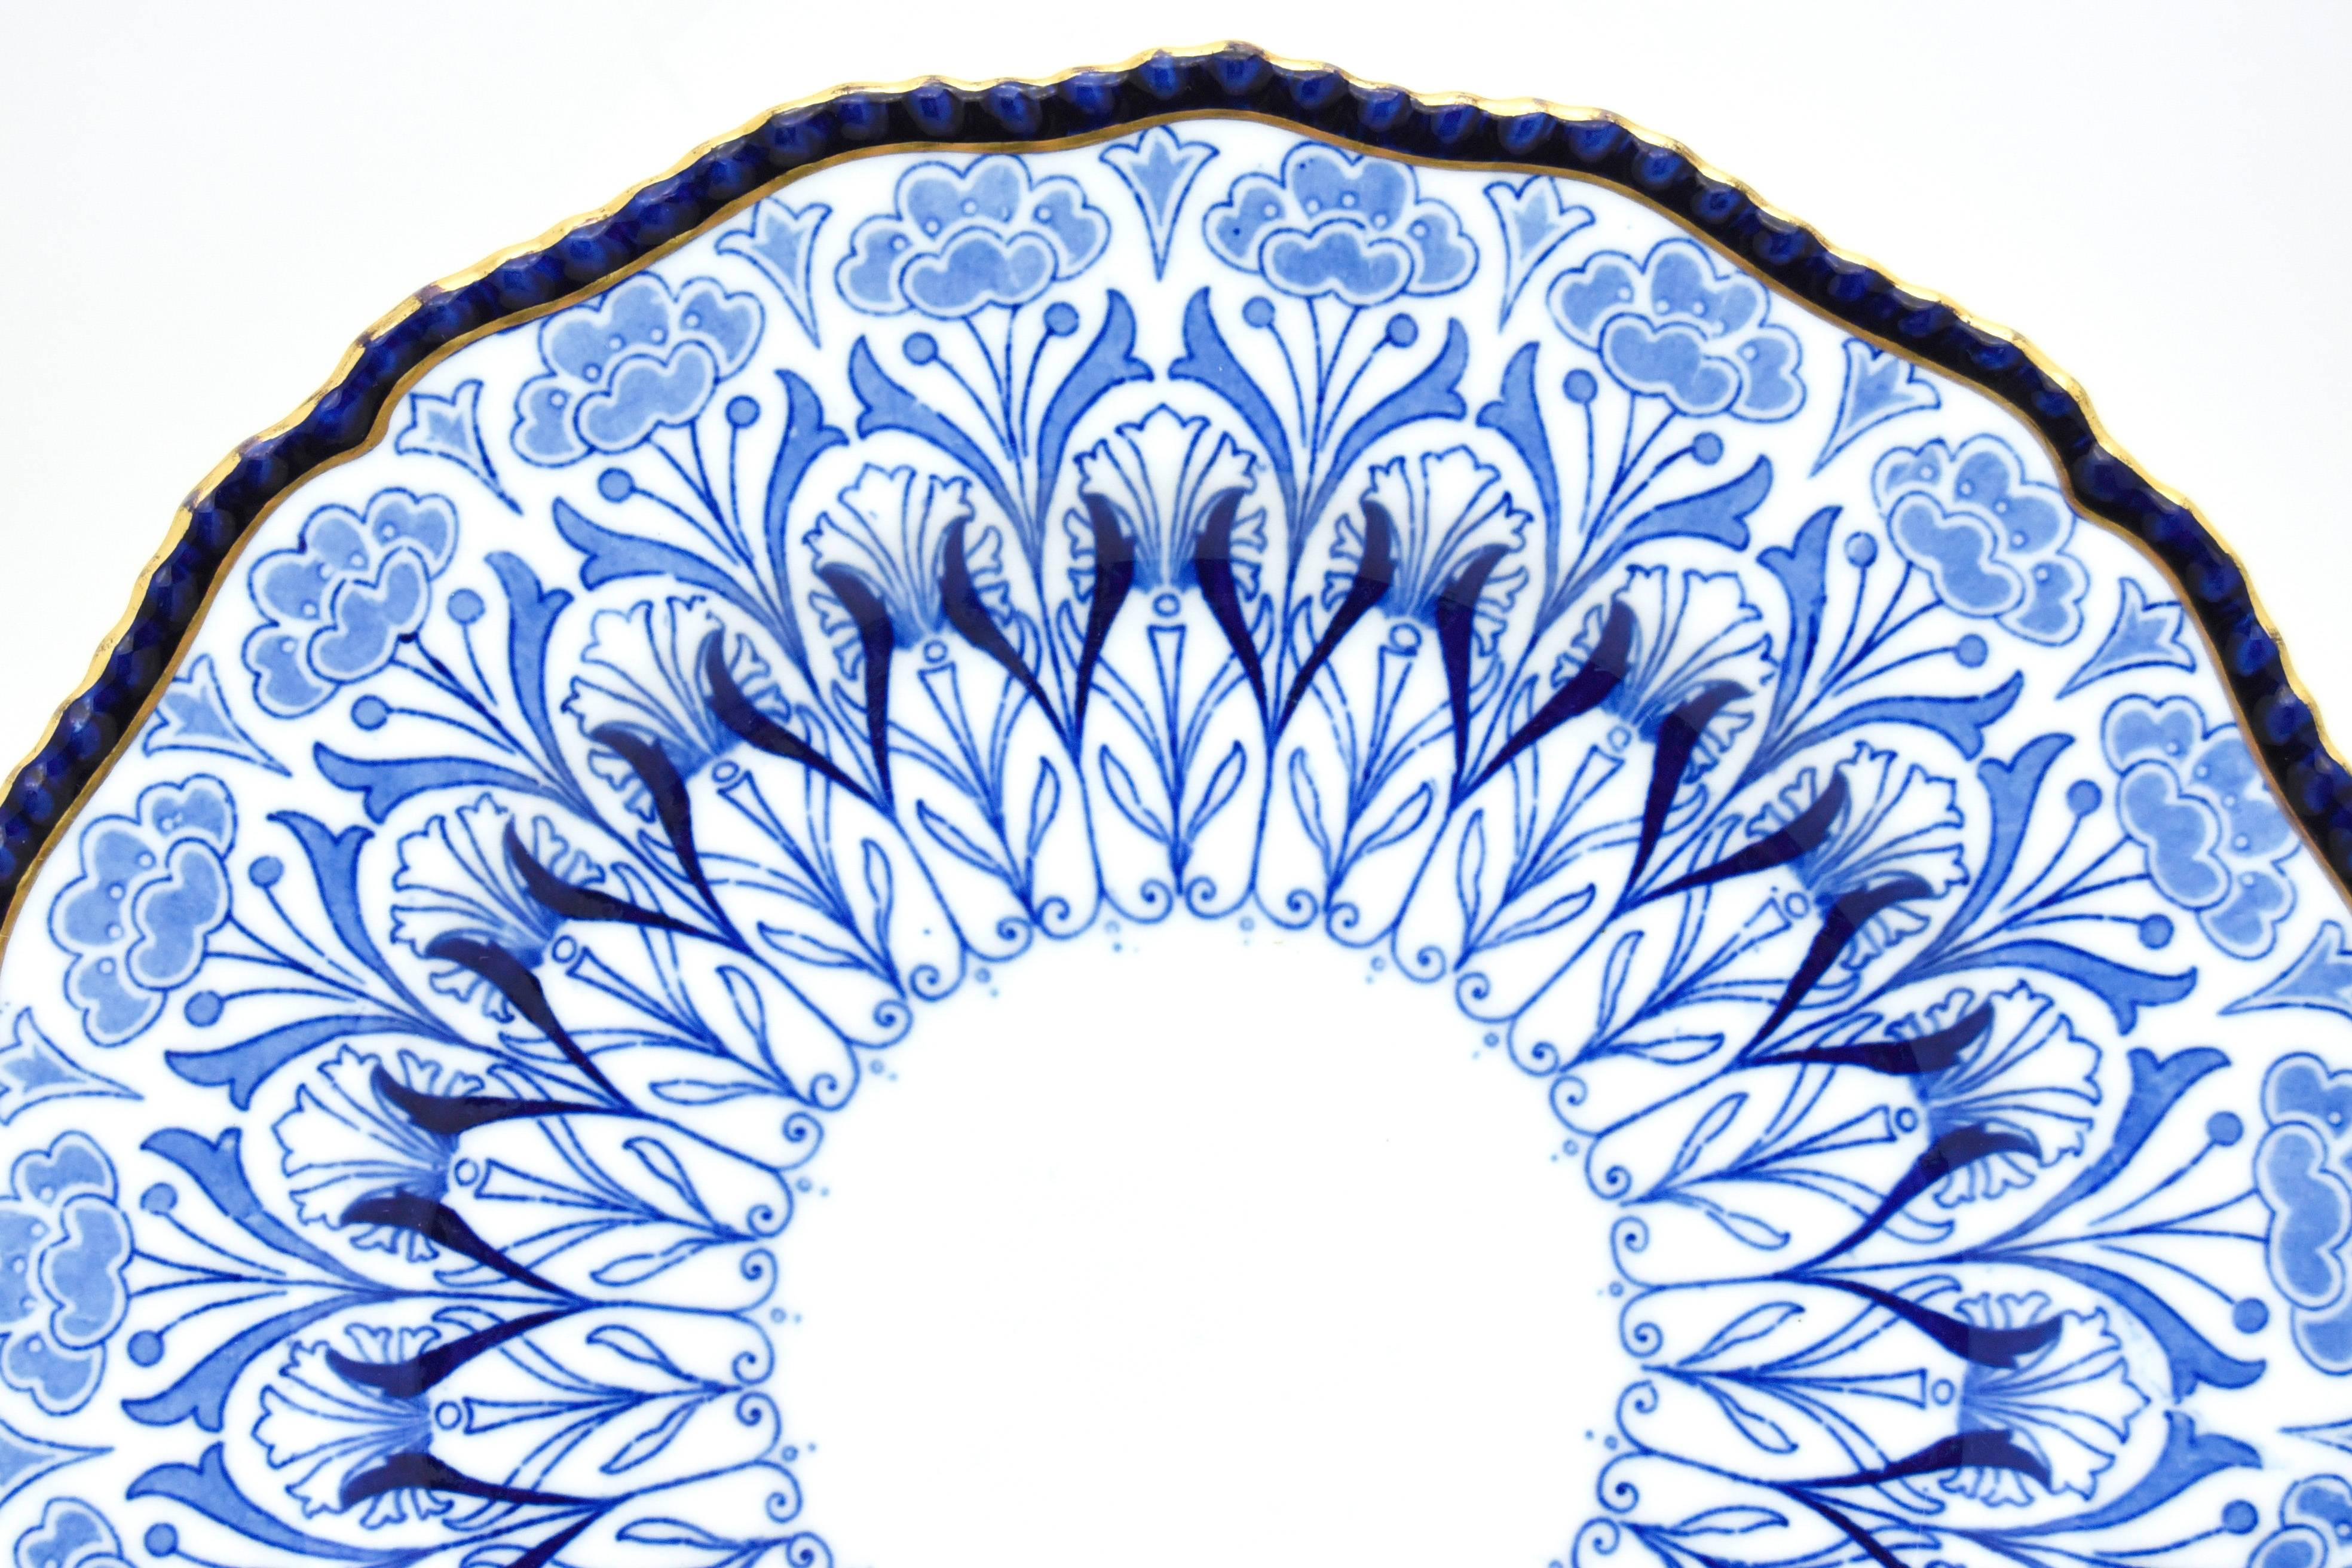 English Set of 11 Doulton 19th C. Aesthetic Movement Cobalt Blue Dinner Plates w/ Poppie